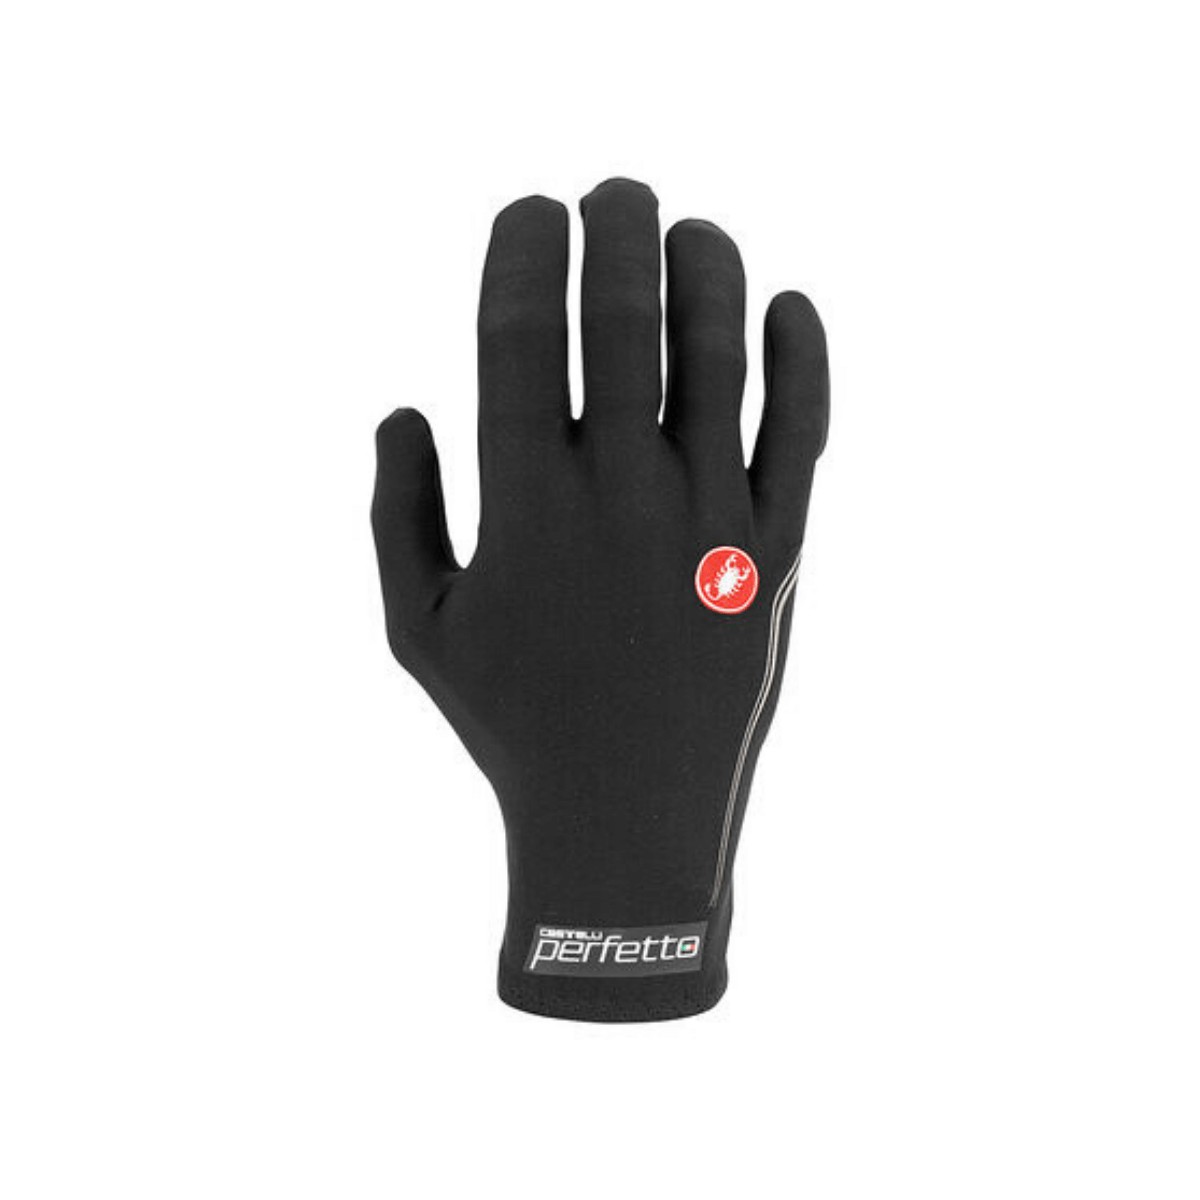 Castelli Perfetto Light Gloves Black Unisex, Size L